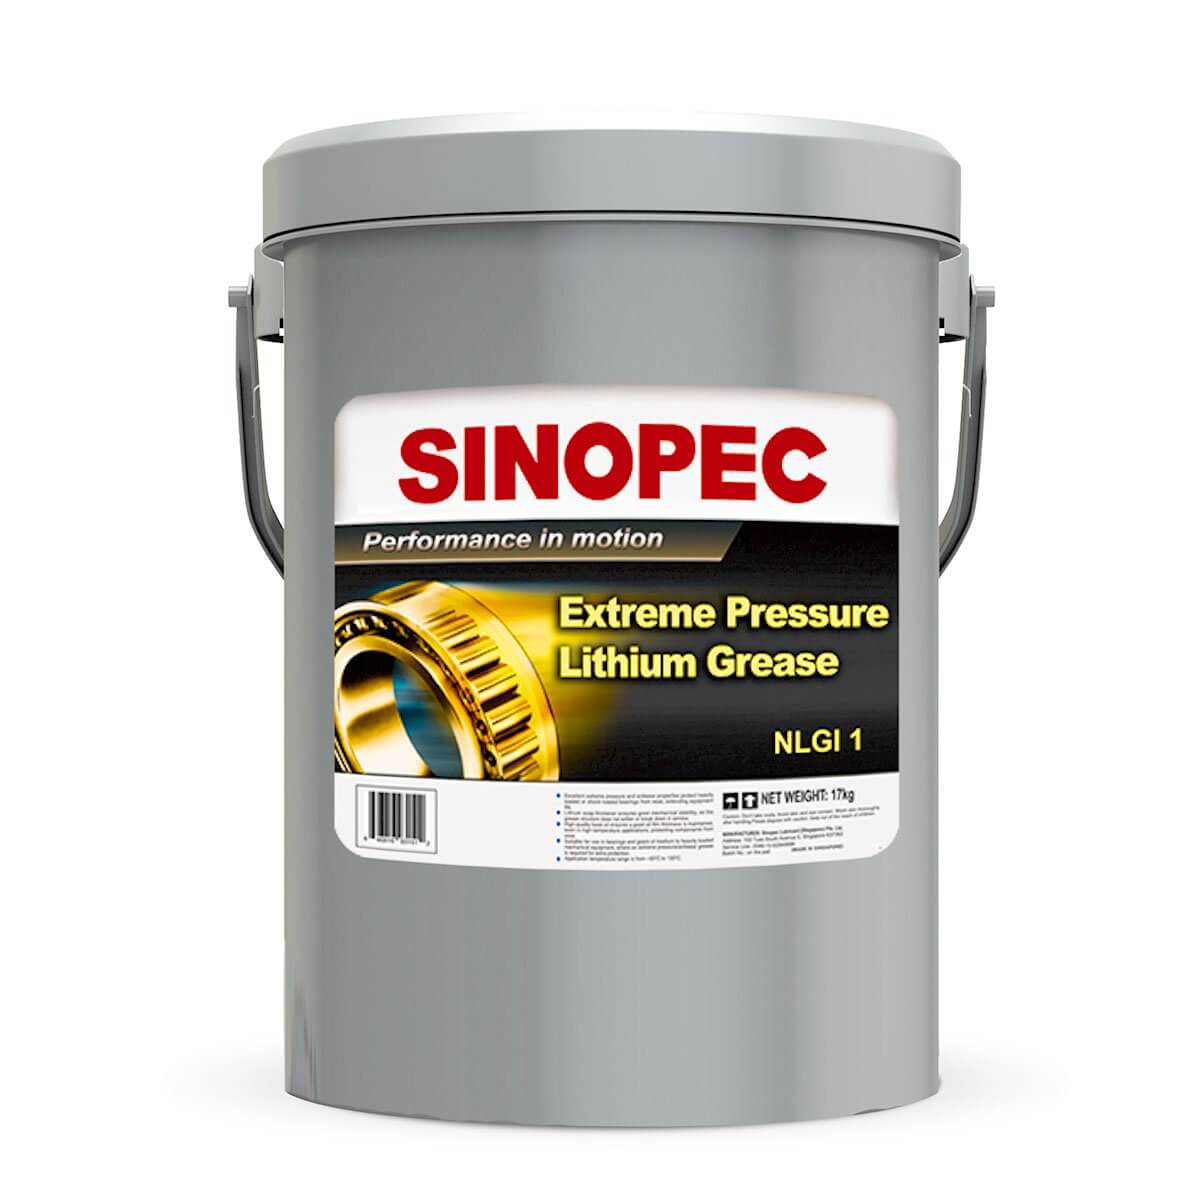 EP1 Lithium Grease-SINOPEC-5 gal,5 Gallon Pail,Brand_Sinopec,Category_Grease,Grade_NLGI 1,sinopec,Size_35 LB Pail,Type_Extreme Pressure